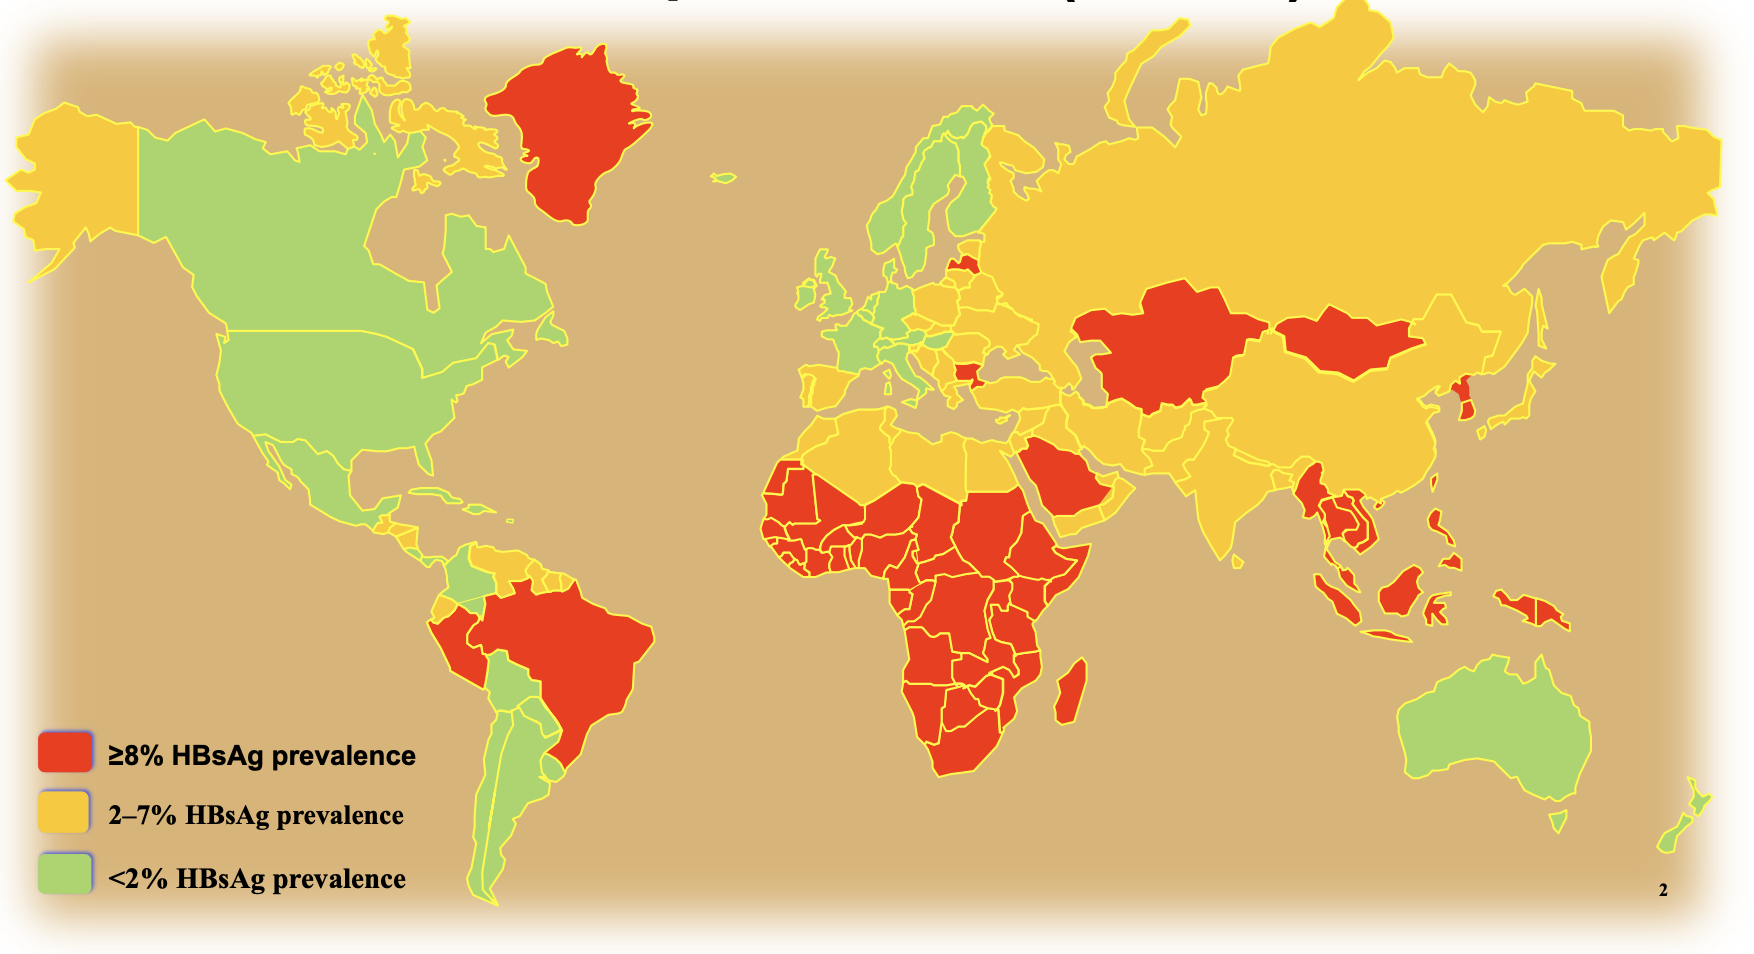 HBV prevalence in the world